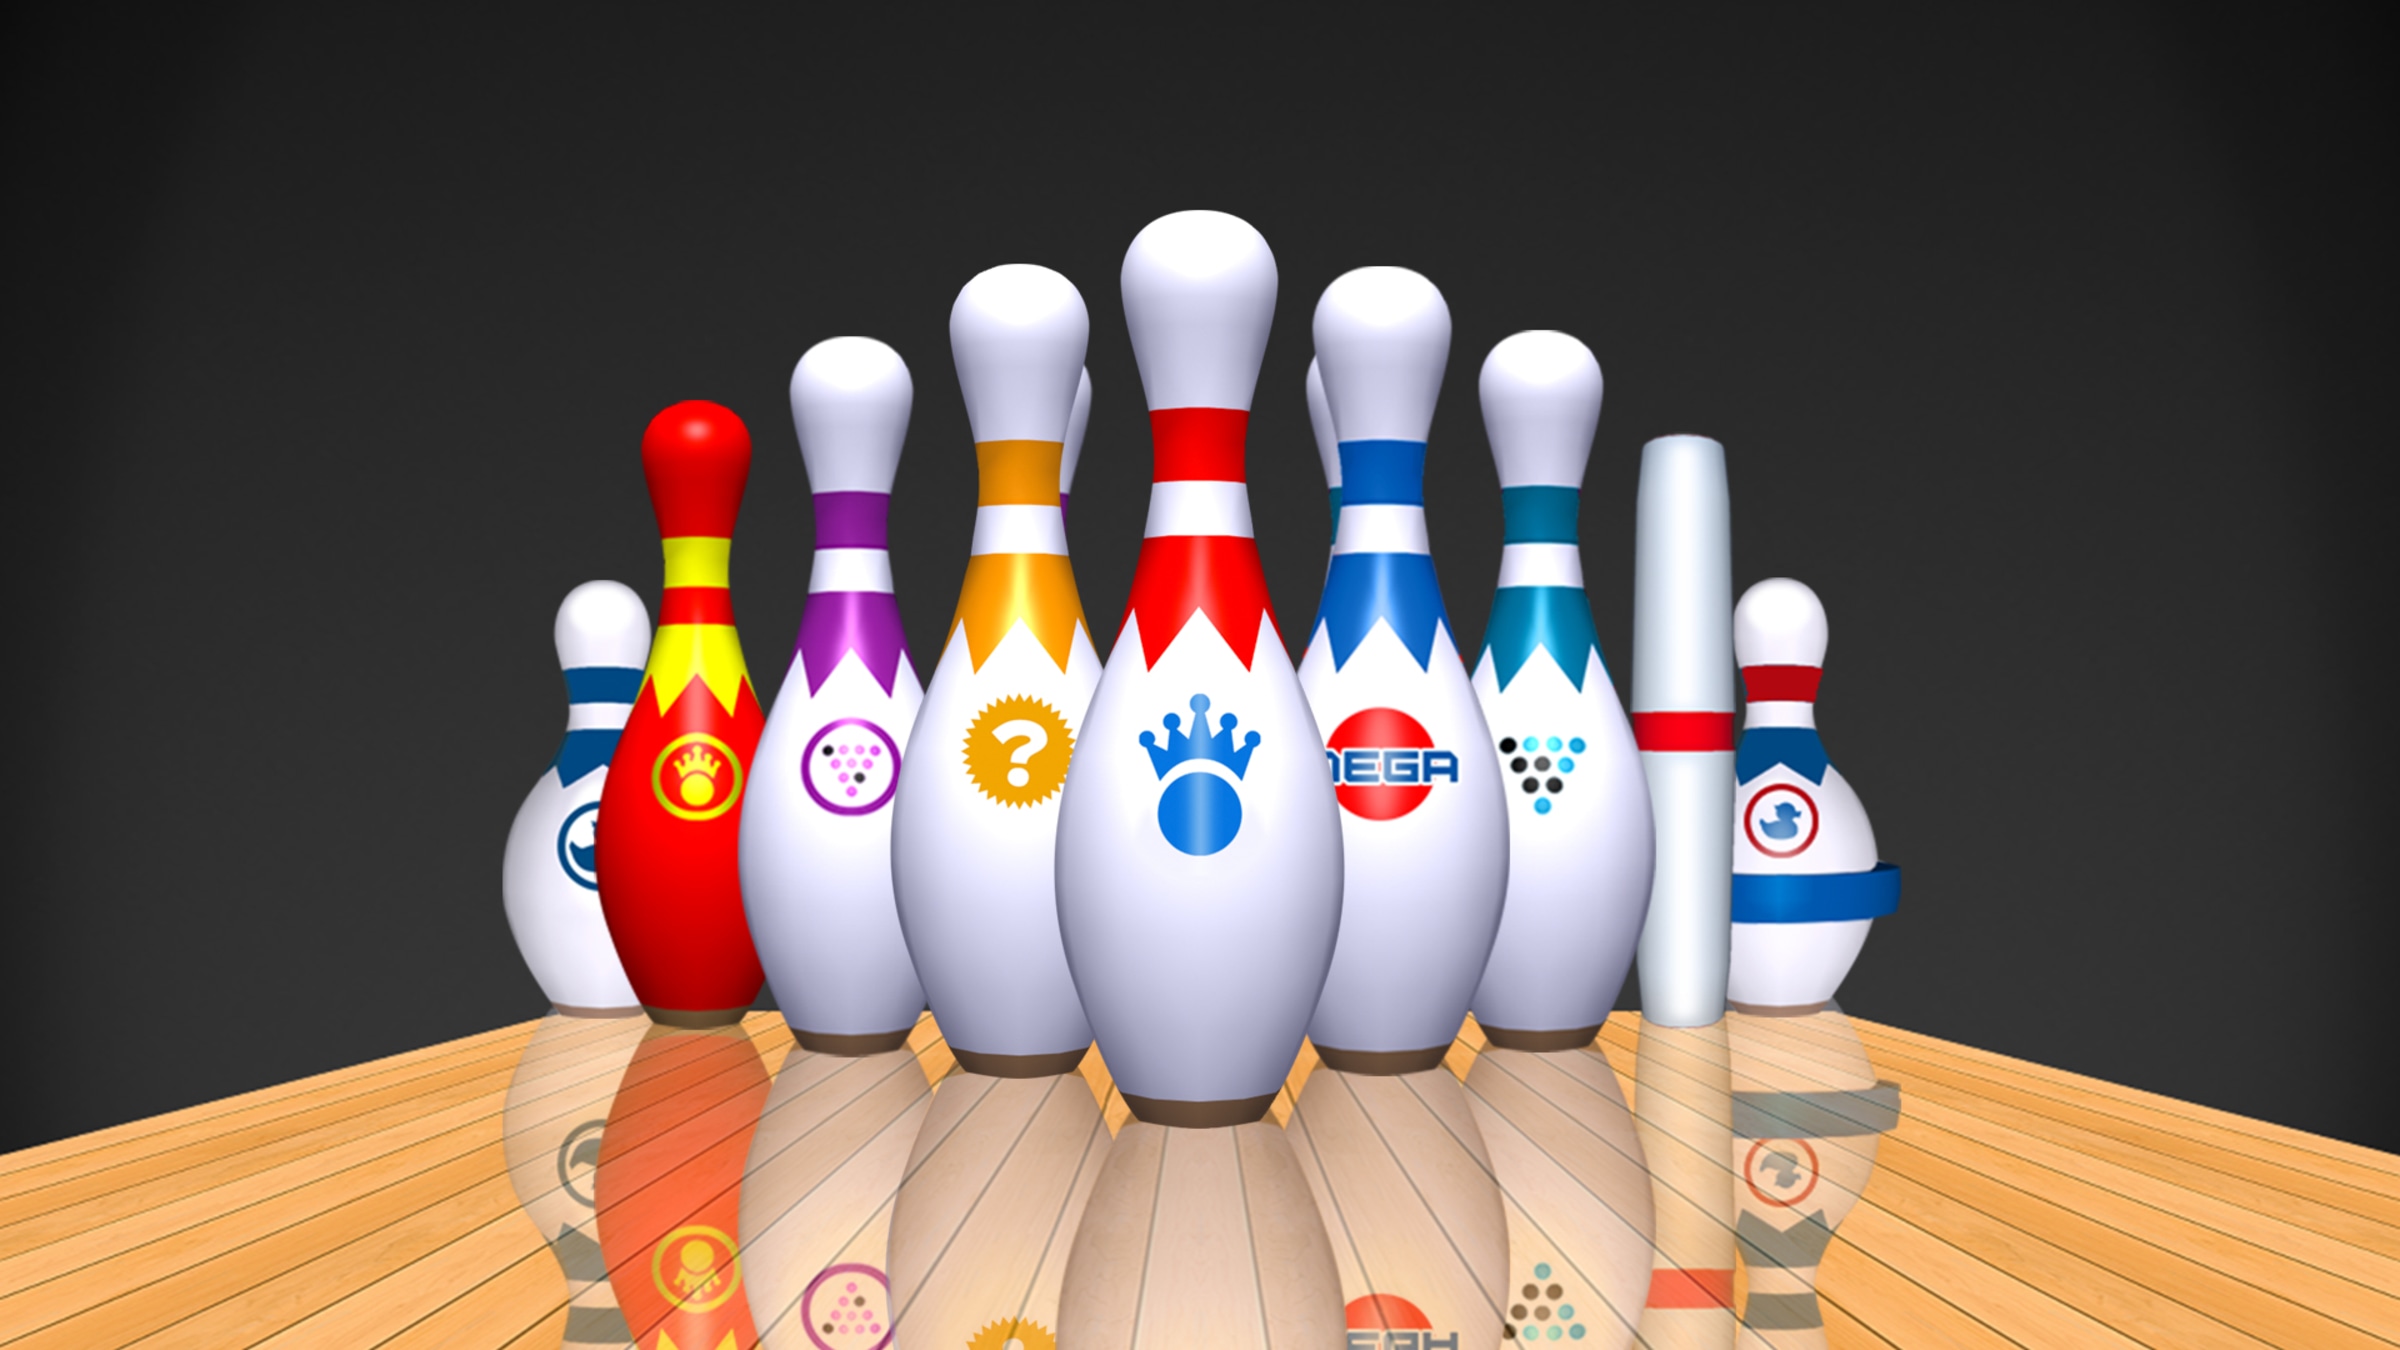 Strike! Ten Pin Bowling for Nintendo Switch